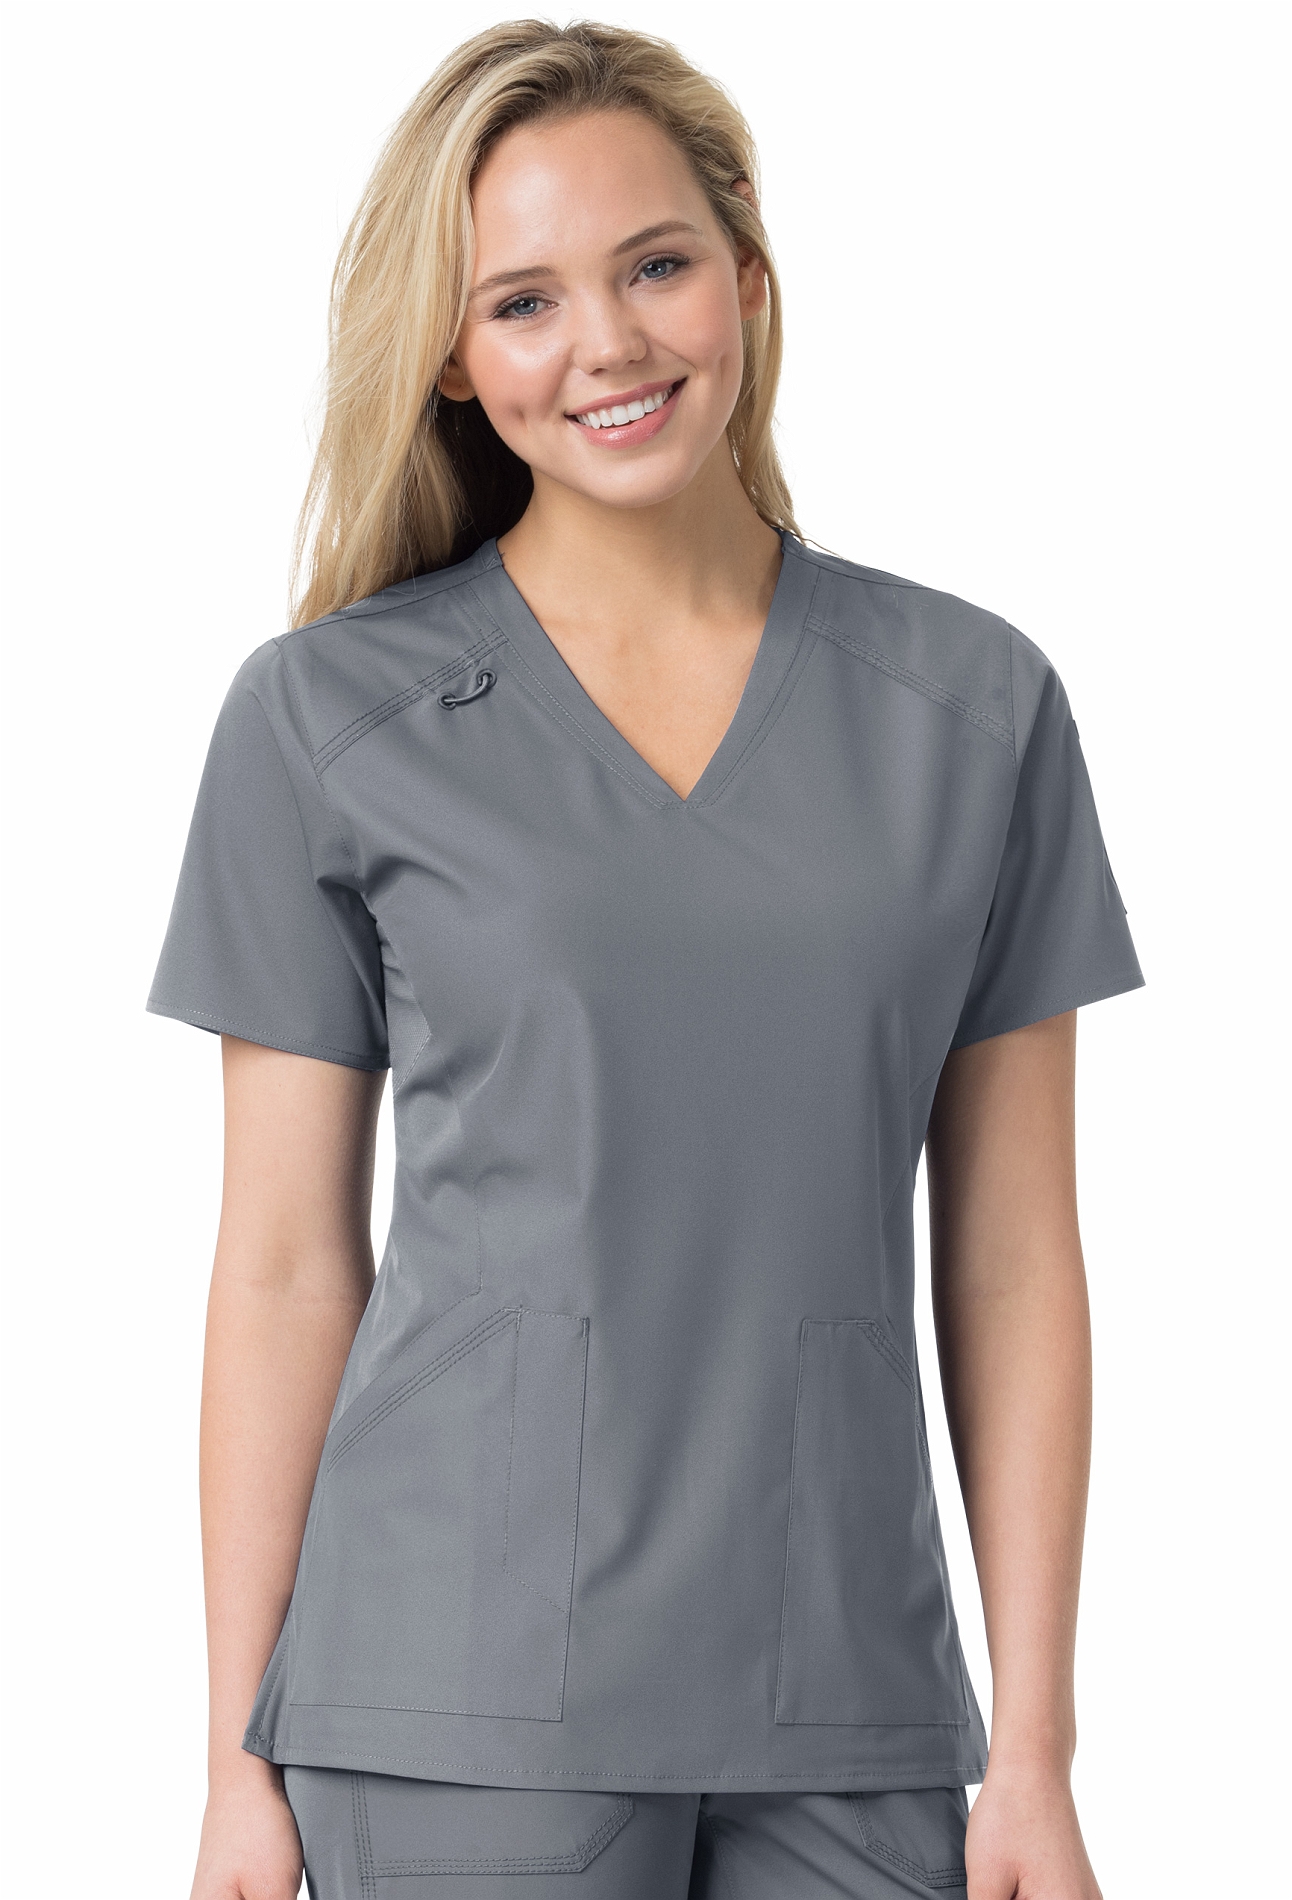 Carhartt Liberty Women's Multi-Pocket V-Neck Scrub Top-C12106 | Medical ...